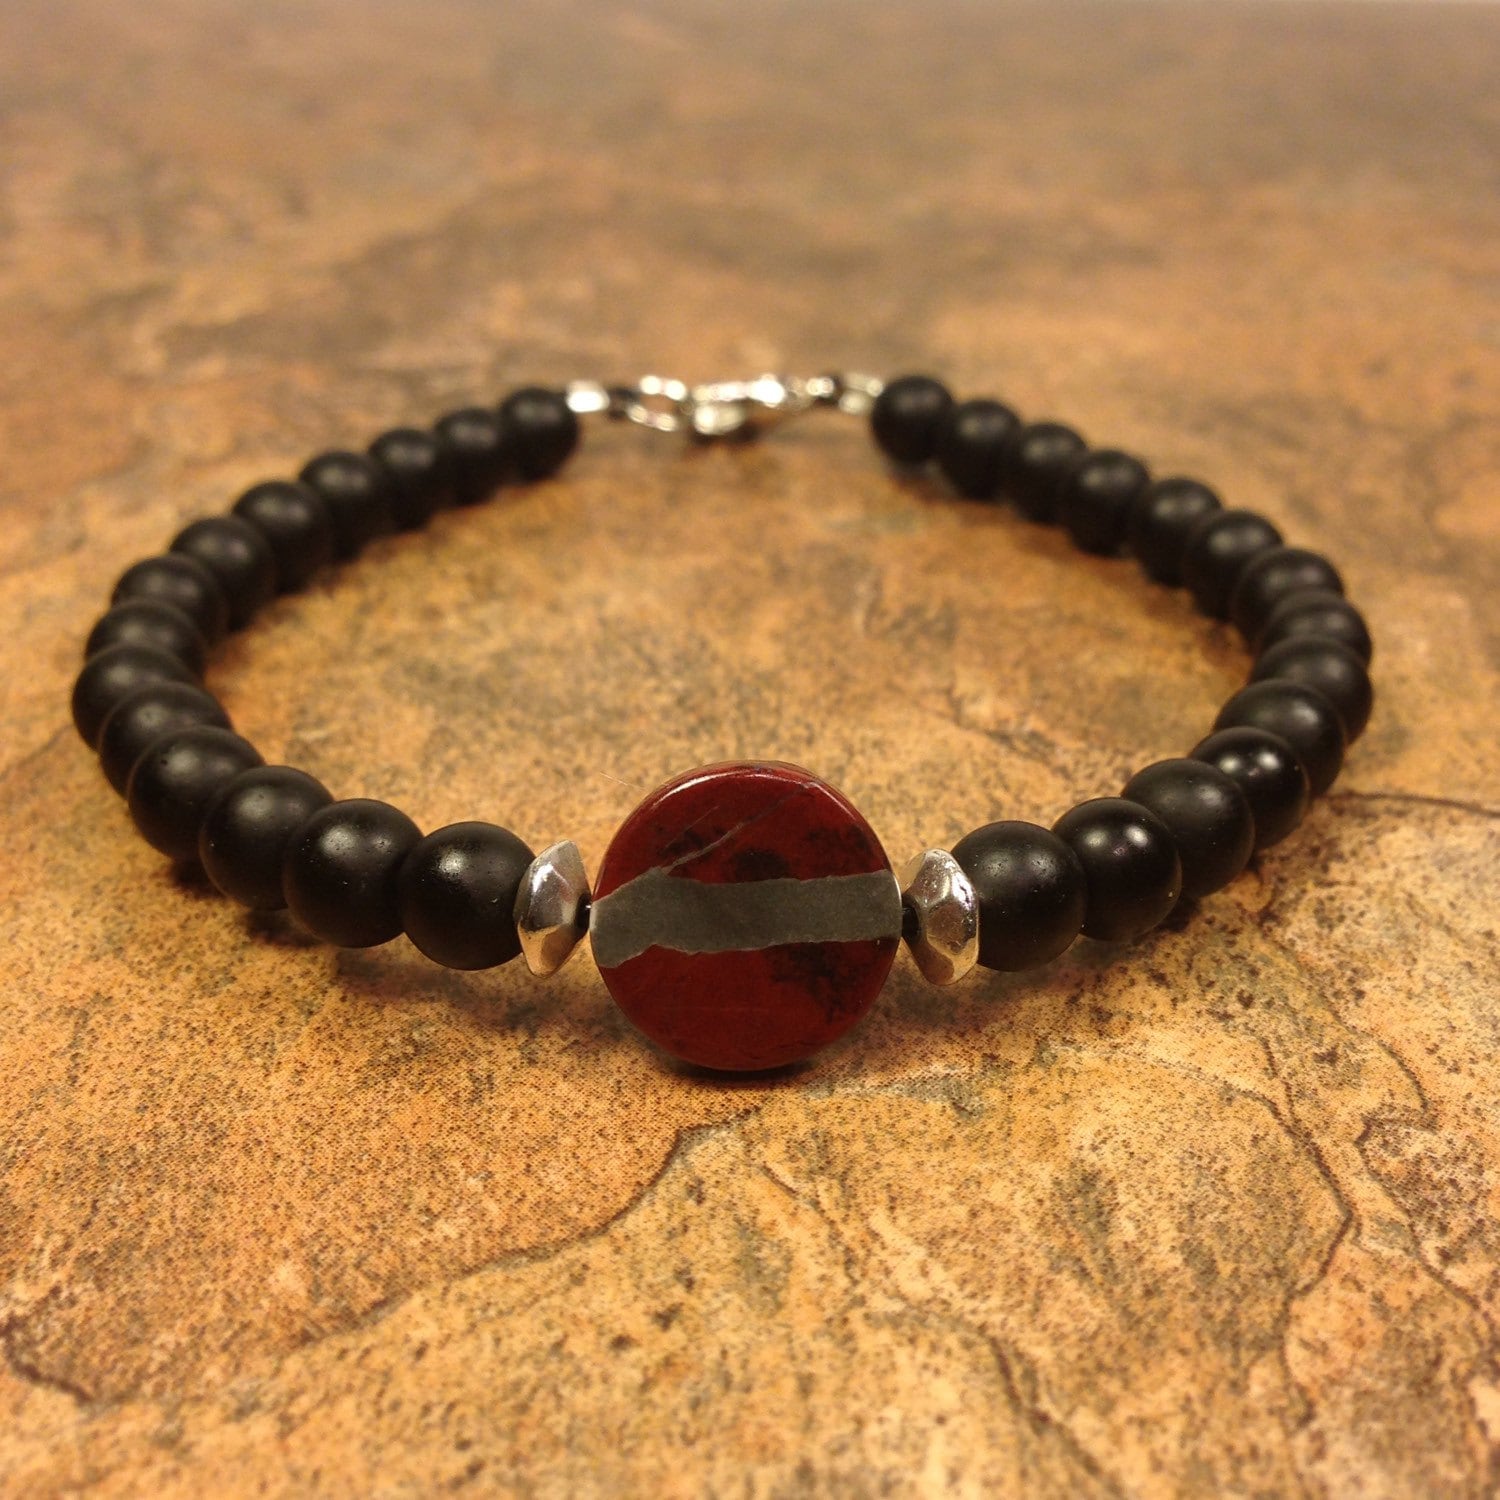 Serpentine stone bracelet with black glass beads beaded